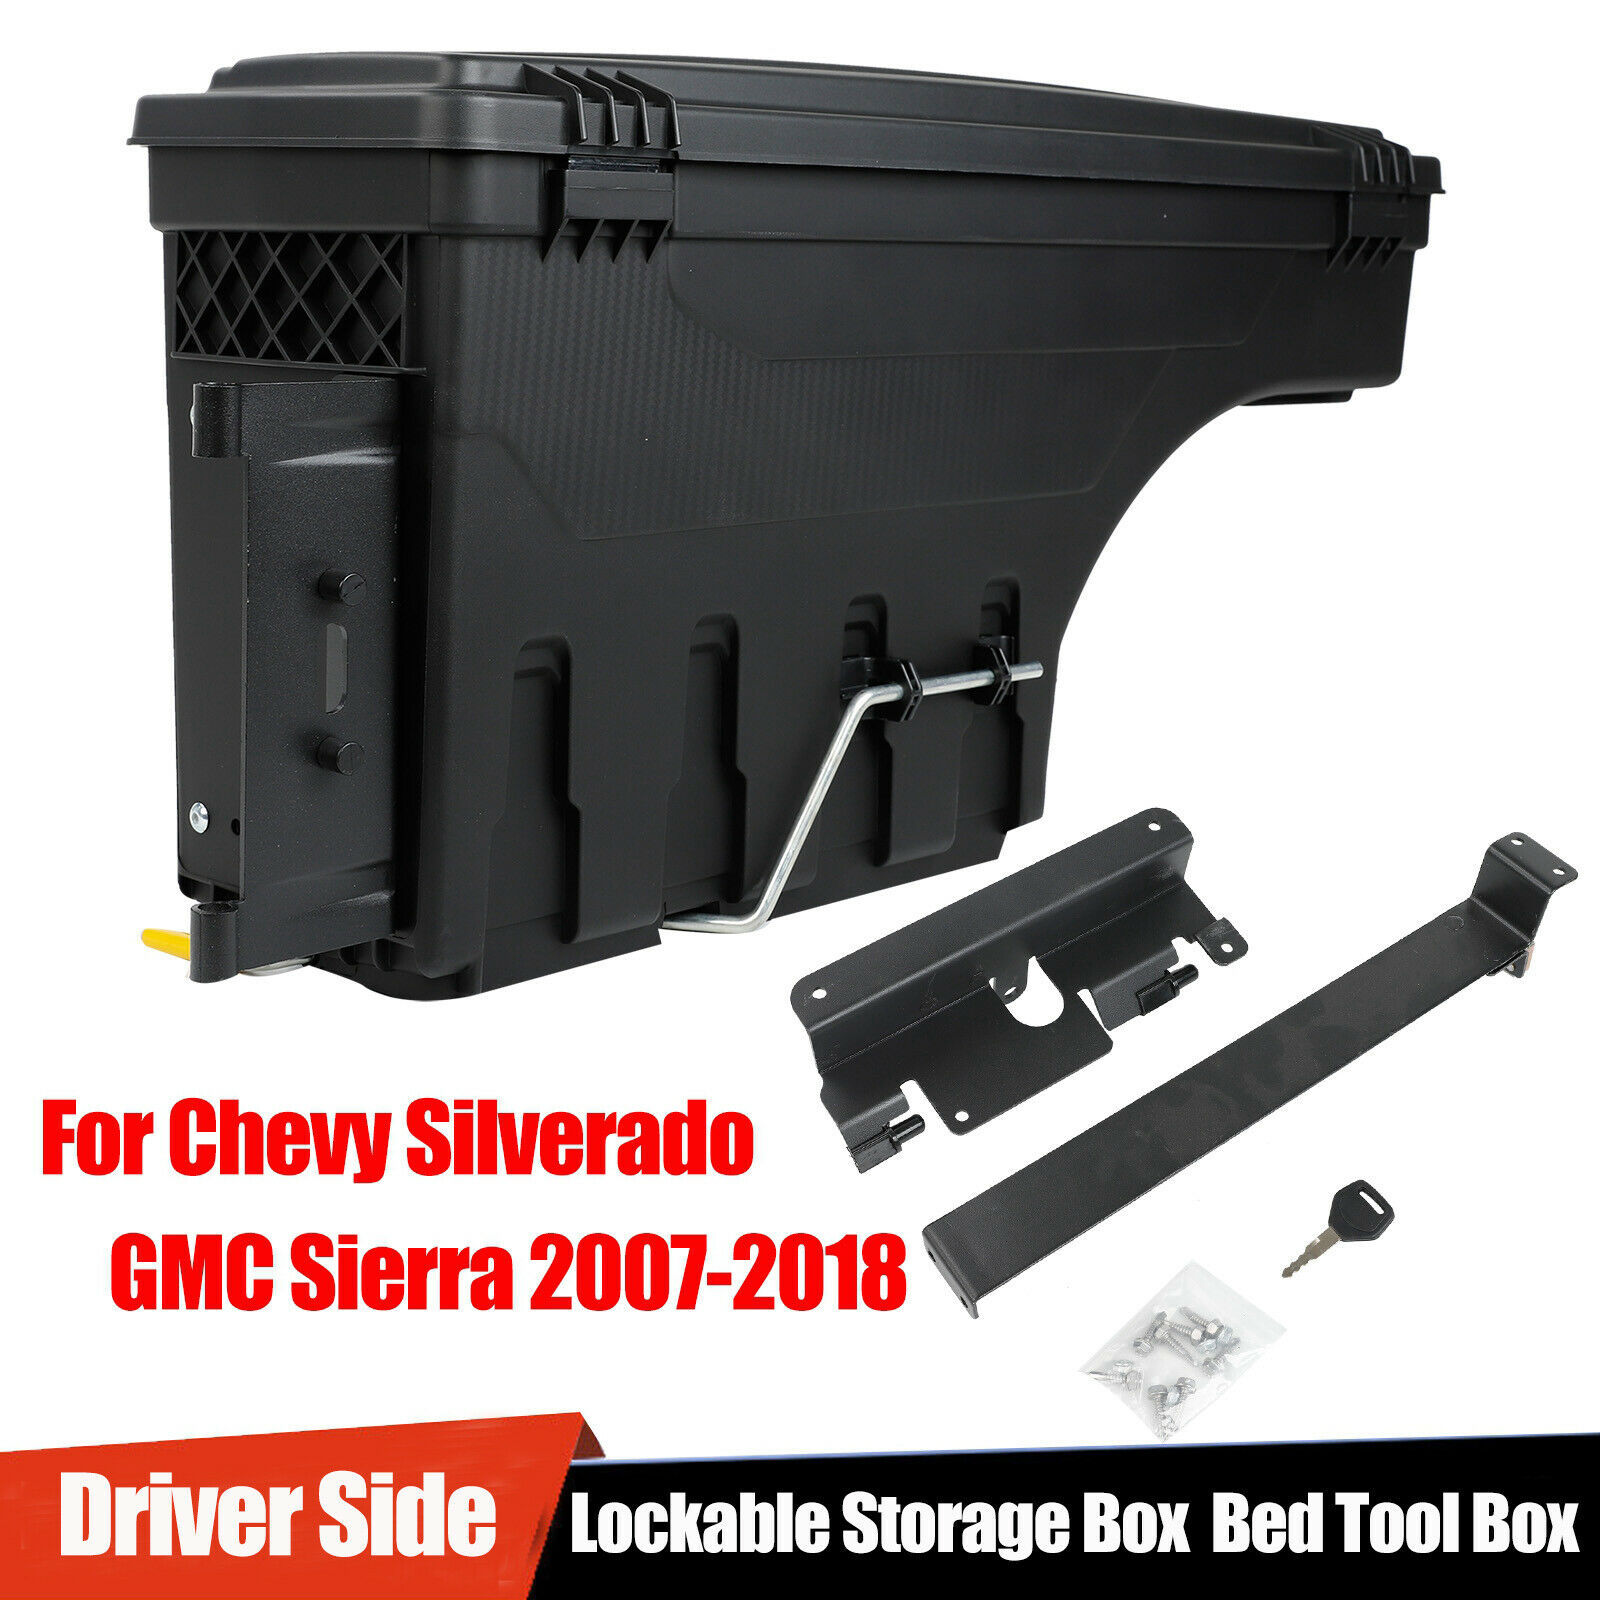 For Chevy Silverado GMC Sierra 07-18 Truck Bed Storage Box Toolbox Left Driver